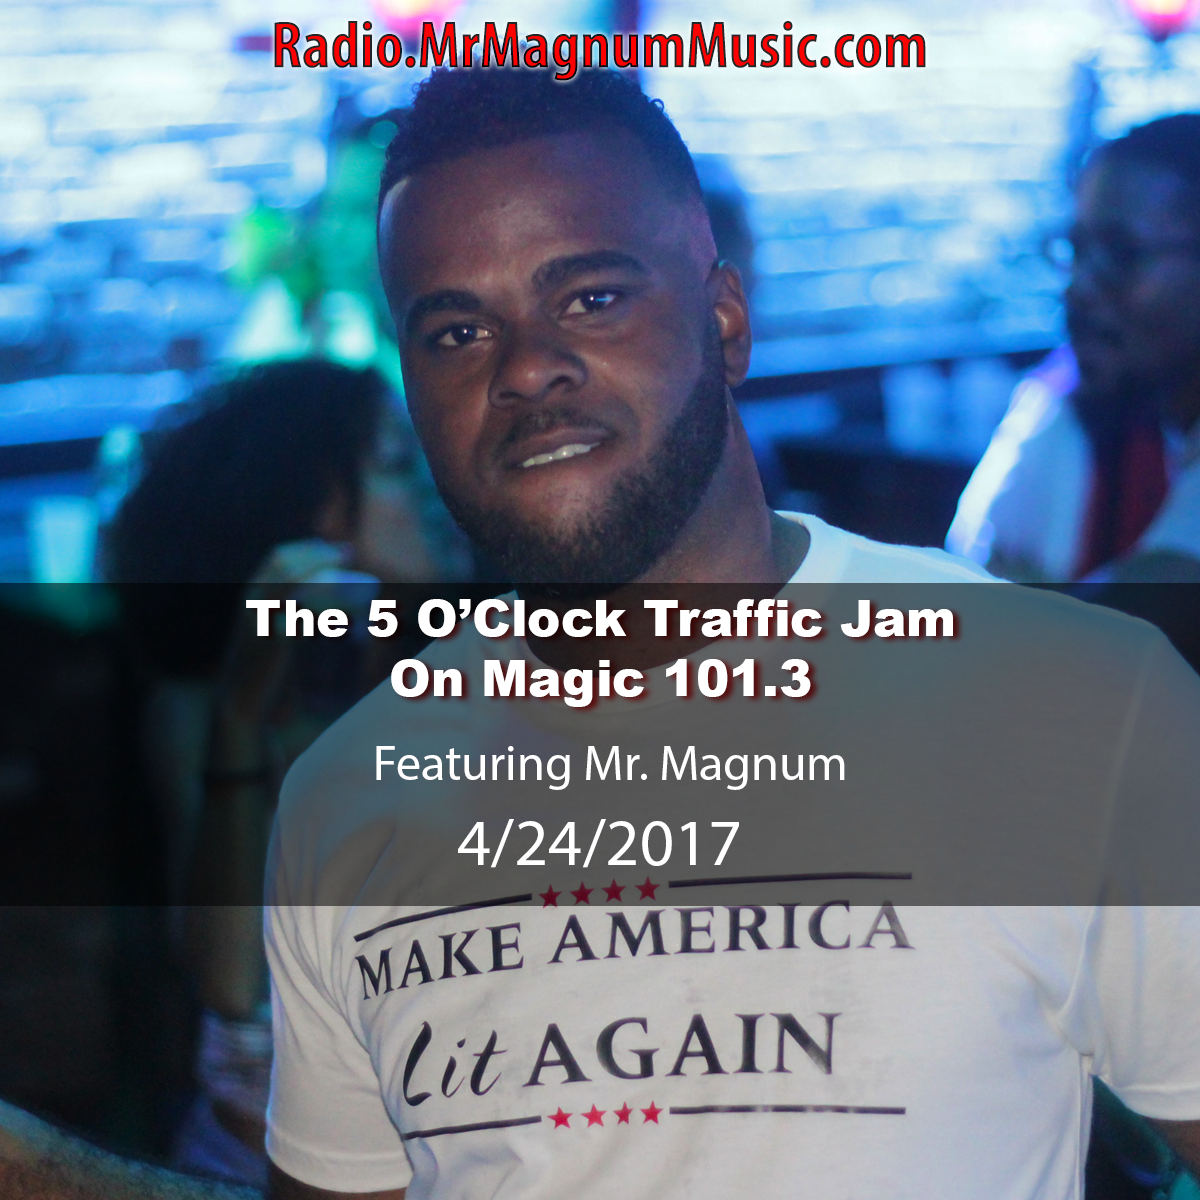 The 5 O'Clock Traffic Jam 20170424 featuring Gainesville's #1 DJ, Mr. Magnum on Magic 101.3